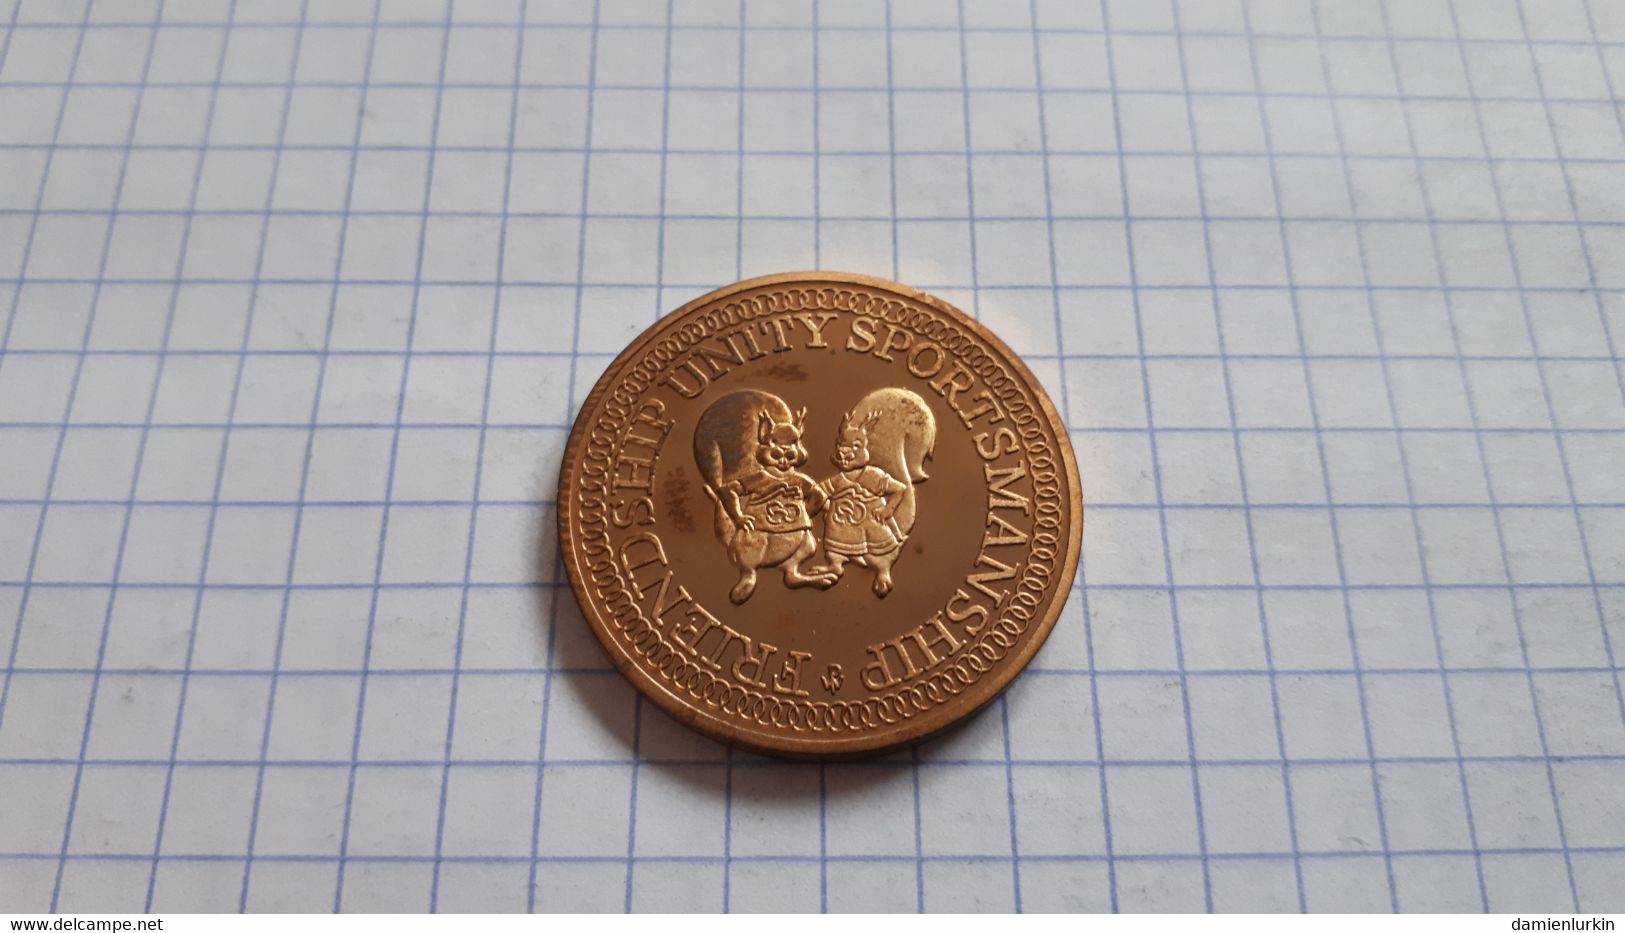 PAYS-BAS 1 OLYMPIC FLORIN JEUX PARALYMPIQUES 1980 ARNHEM 21 JUIN AU 5 JUILLET FOR DISABLED HOLLAND FRAPPE MEDAILLE 30MM - Trade Coins